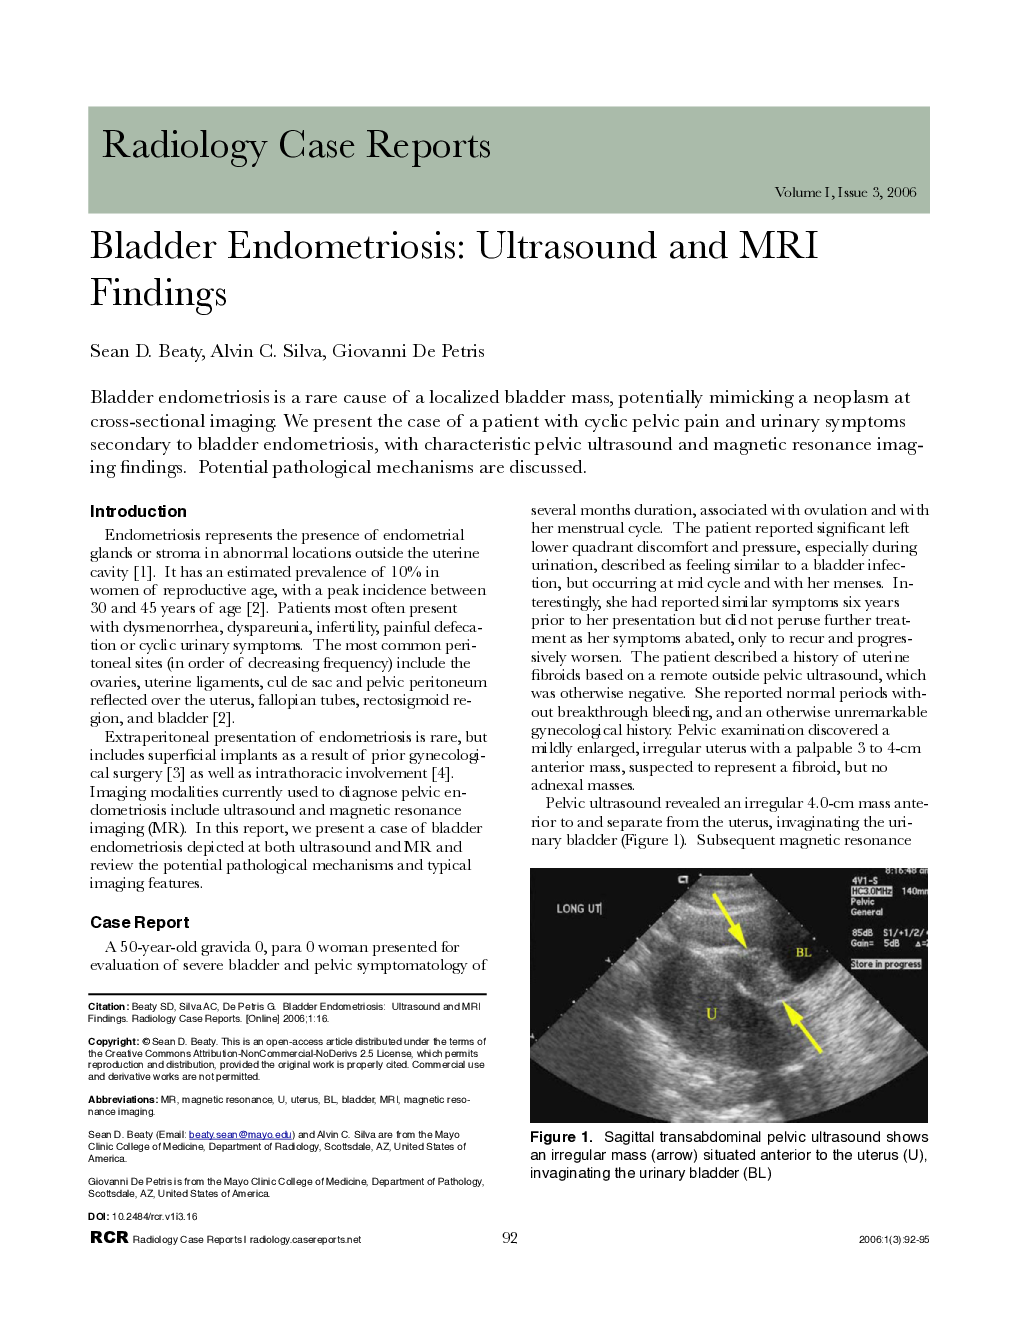 Bladder Endometriosis: Ultrasound and MRI Findings 